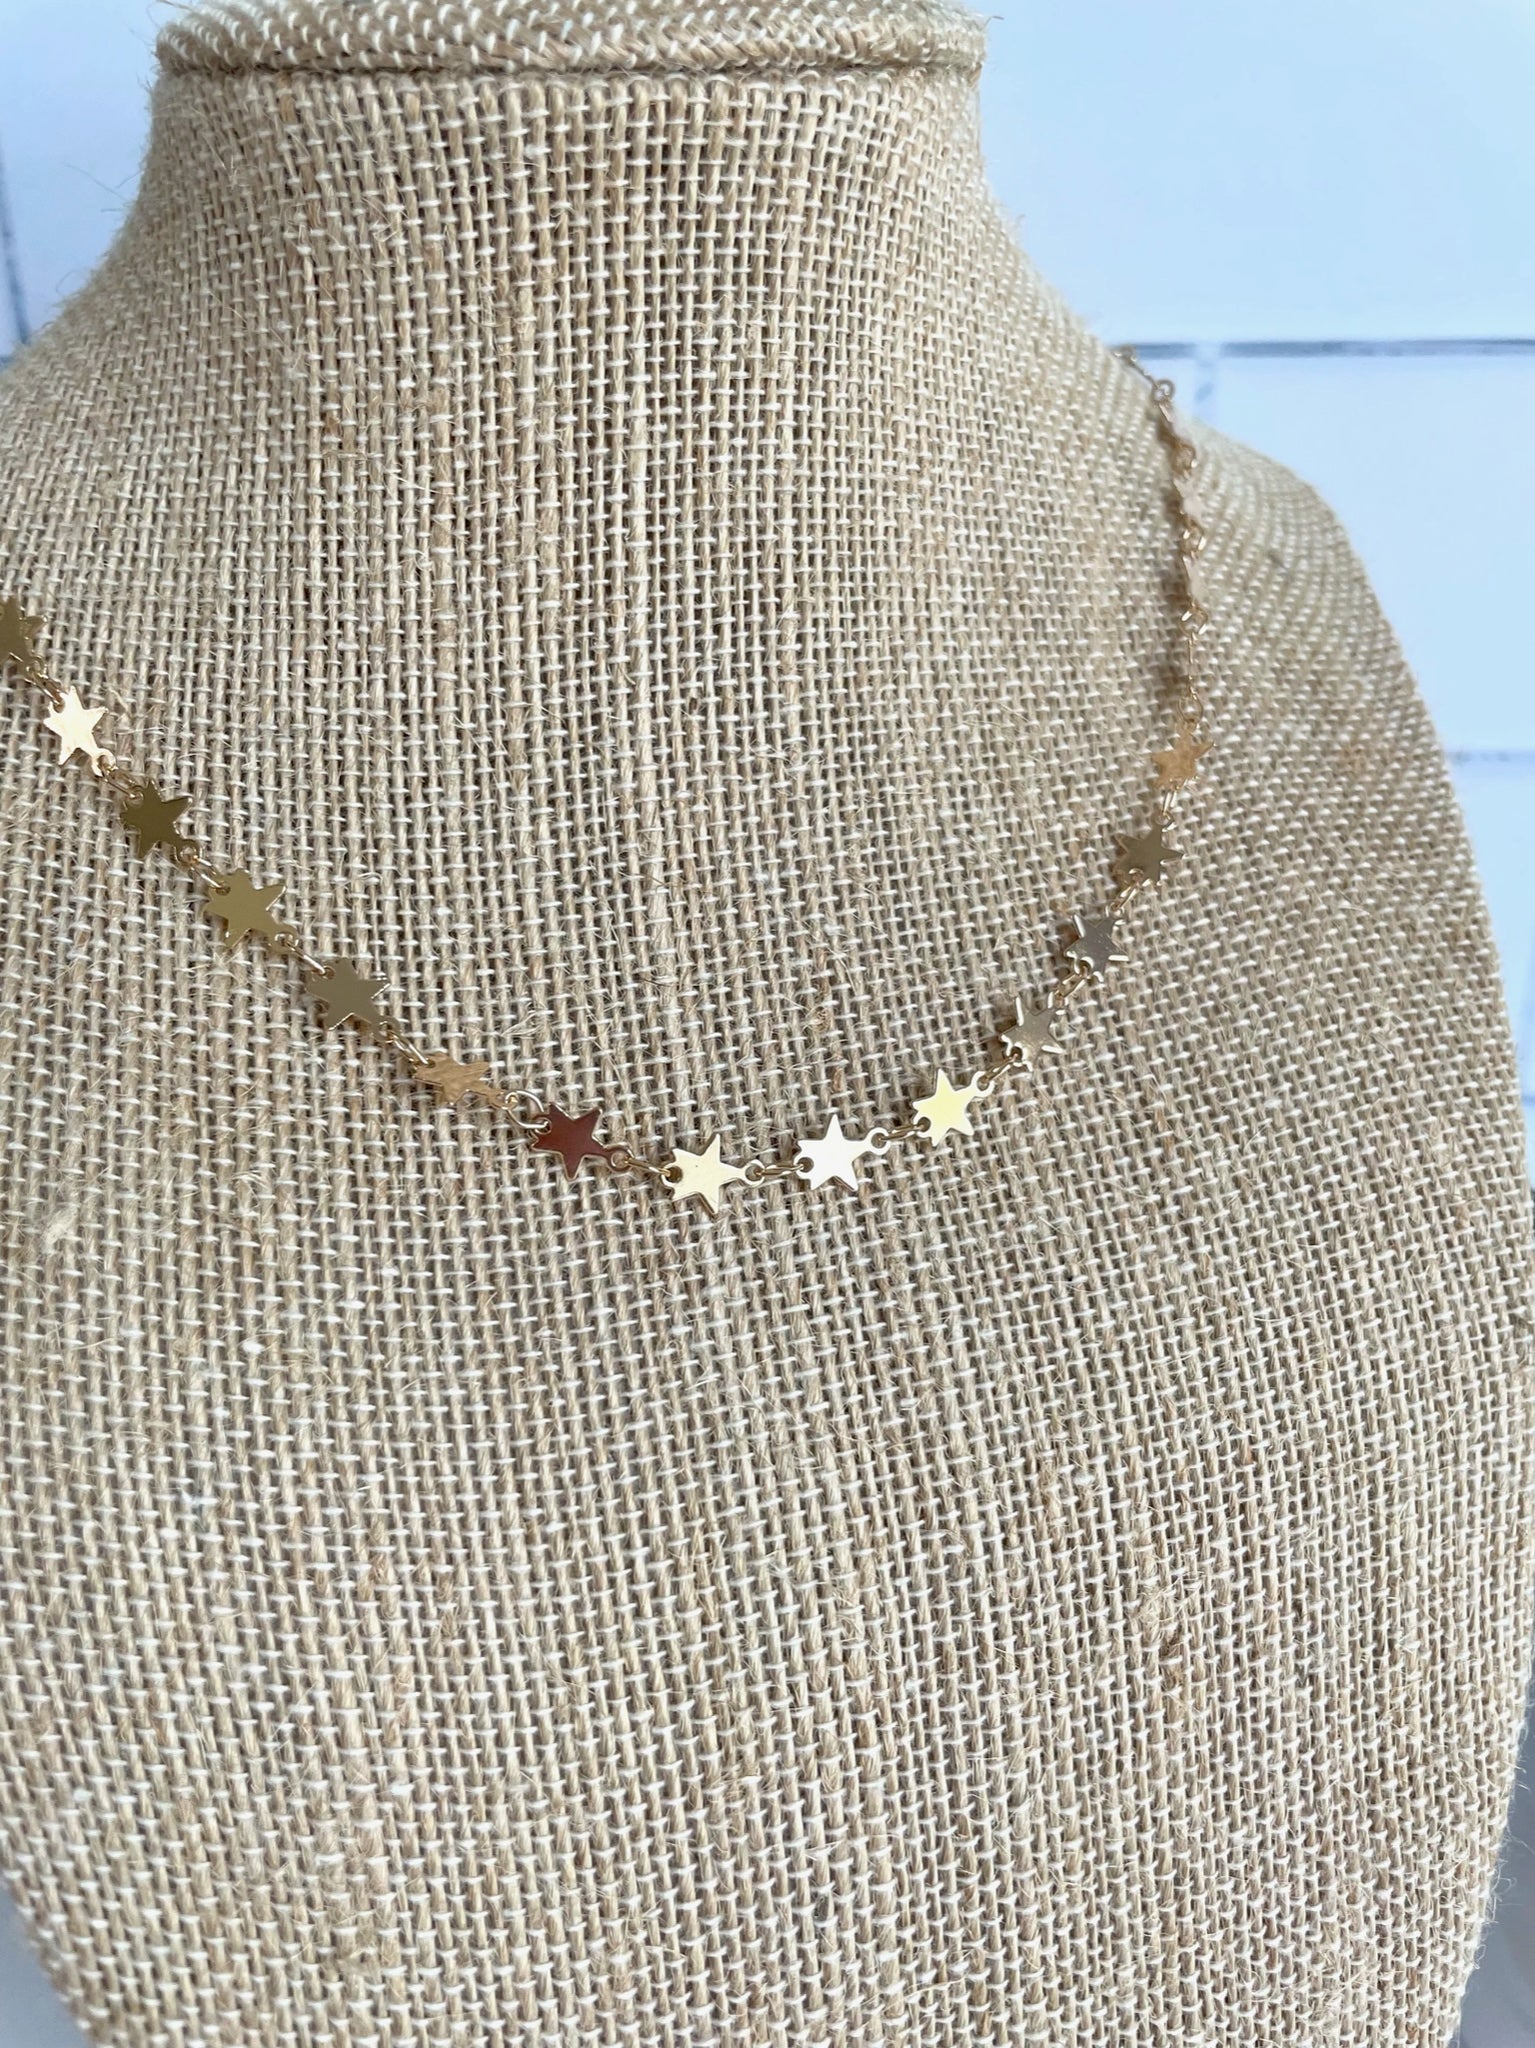 Star Choker Snaffle Bit Bracelet Company - sarah's star necklace roblox